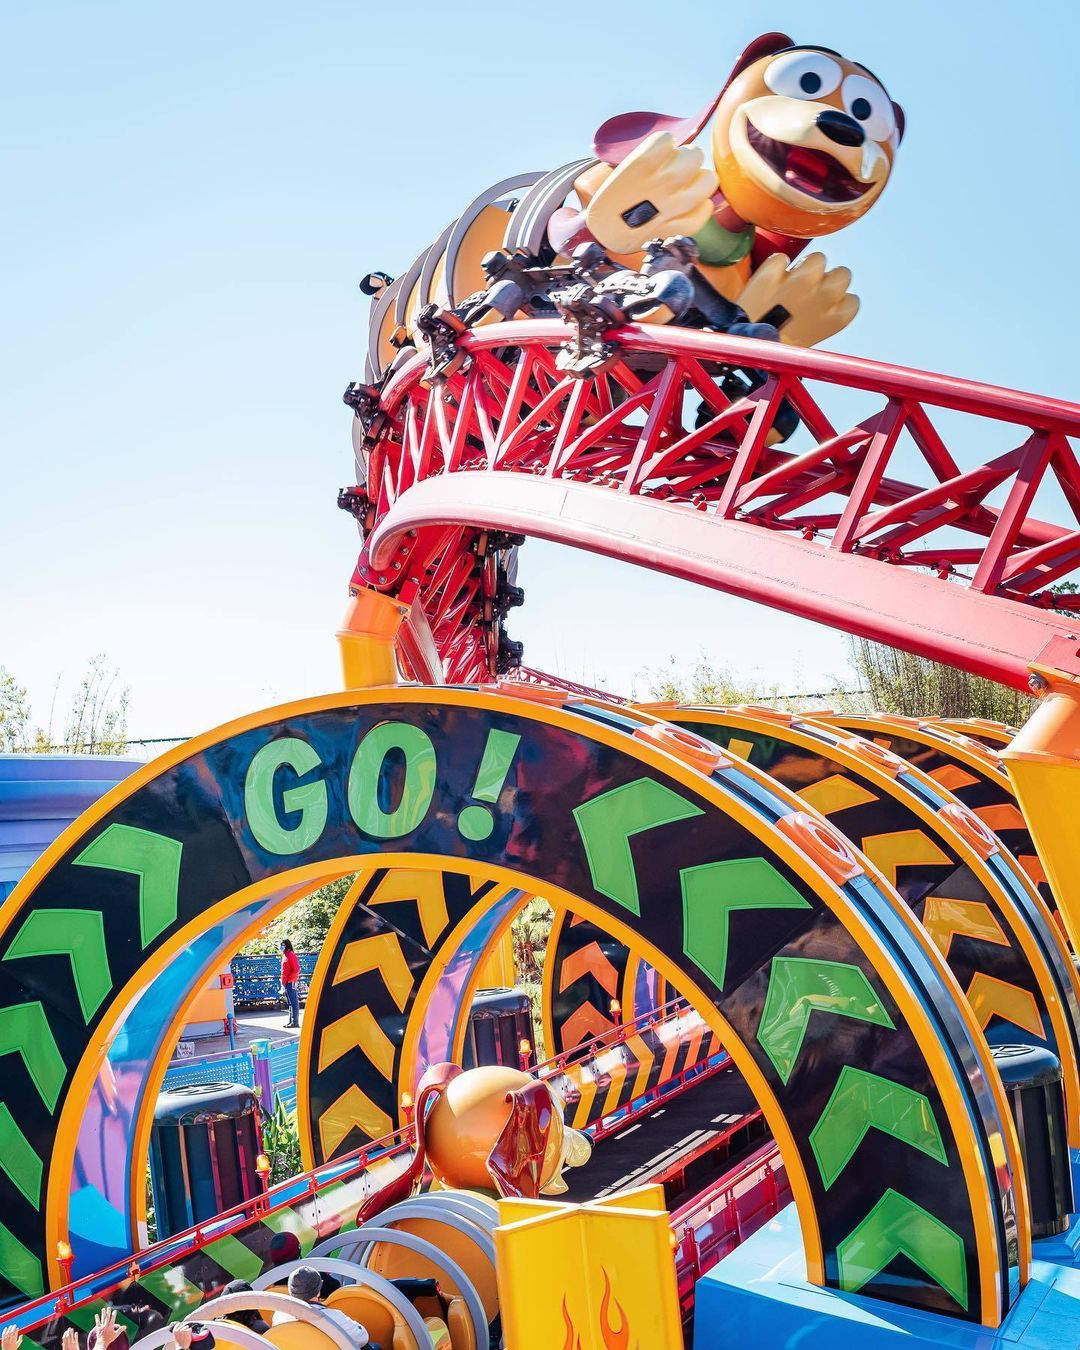 Slinky Dog Dash - Toy Story roller coaster at Disney World